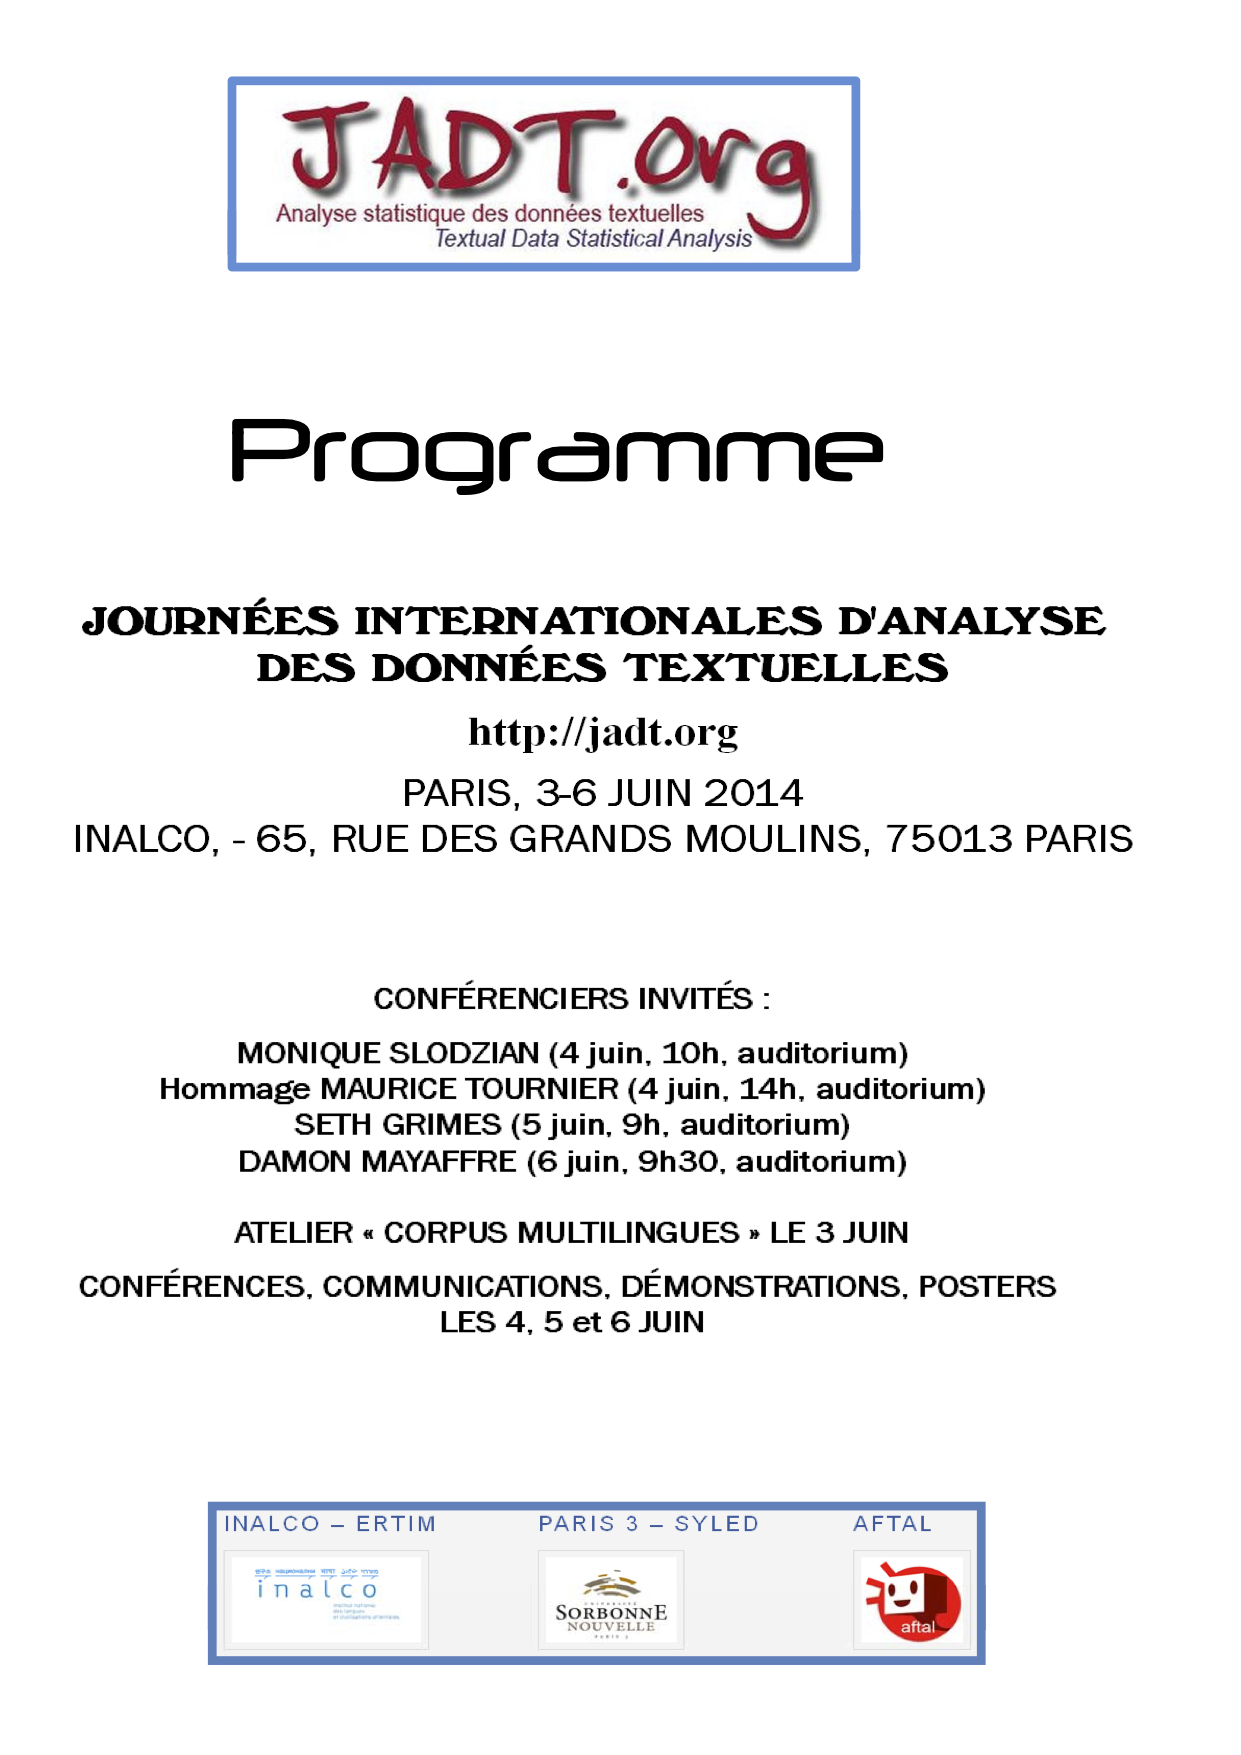 Programme JADT2014